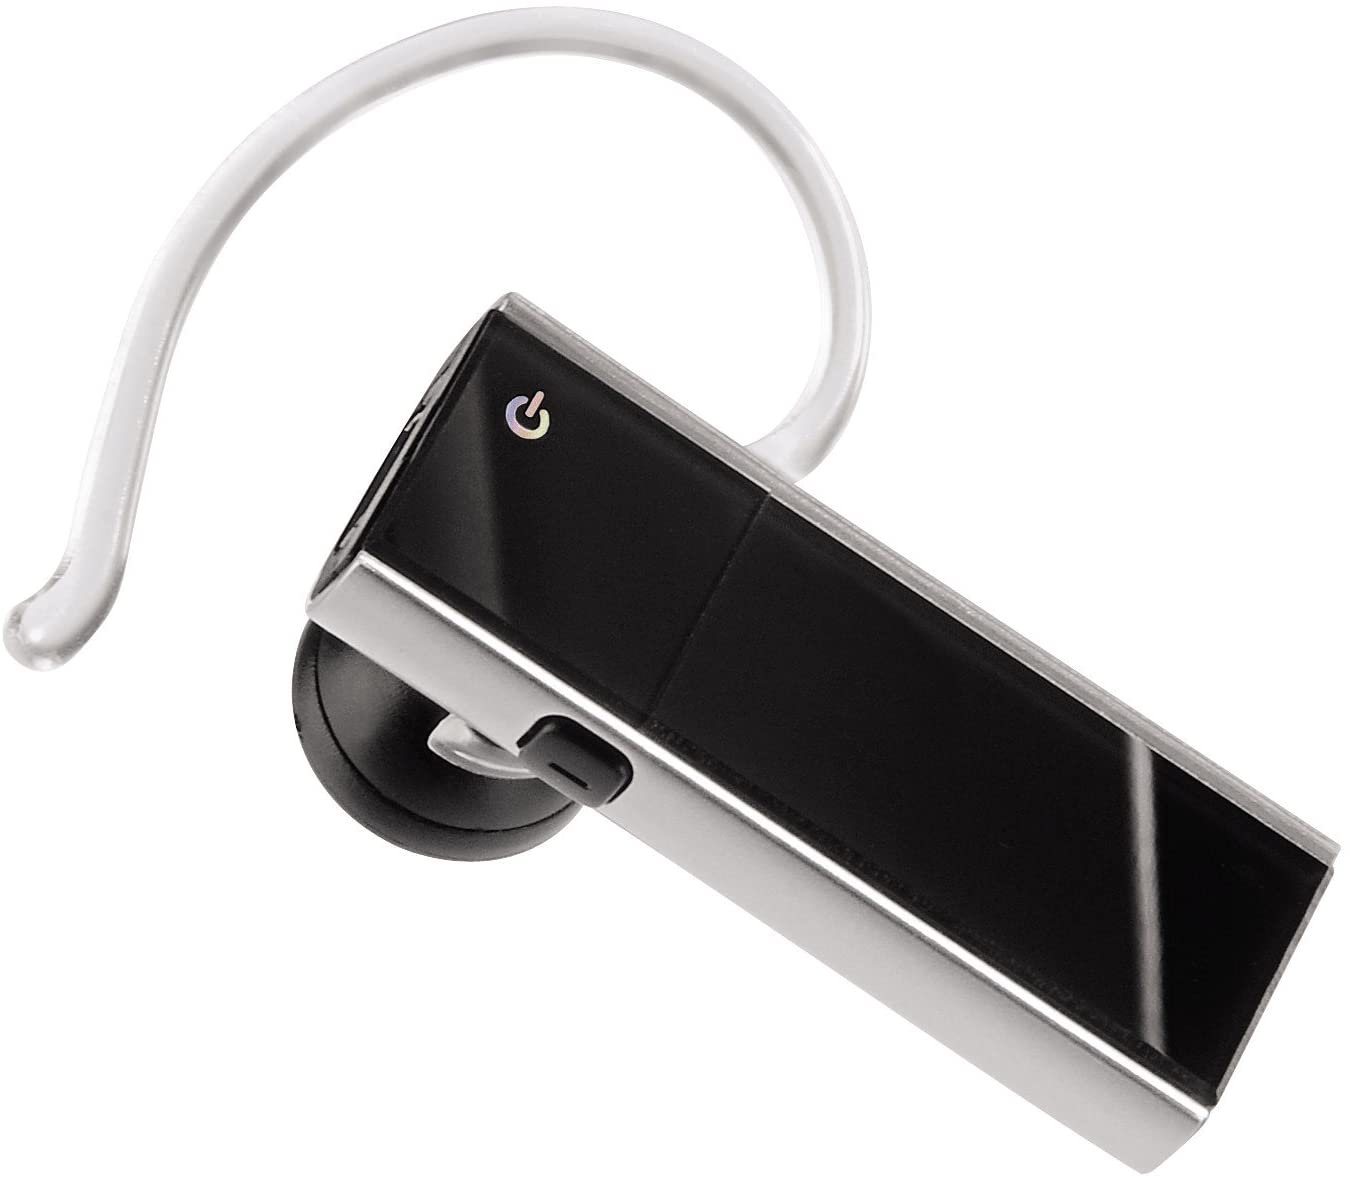 Hama Hama Trexis" Bluetooth Headset Mikrofon zum Telefonieren schwarz Smartphone-Headset" von Hama